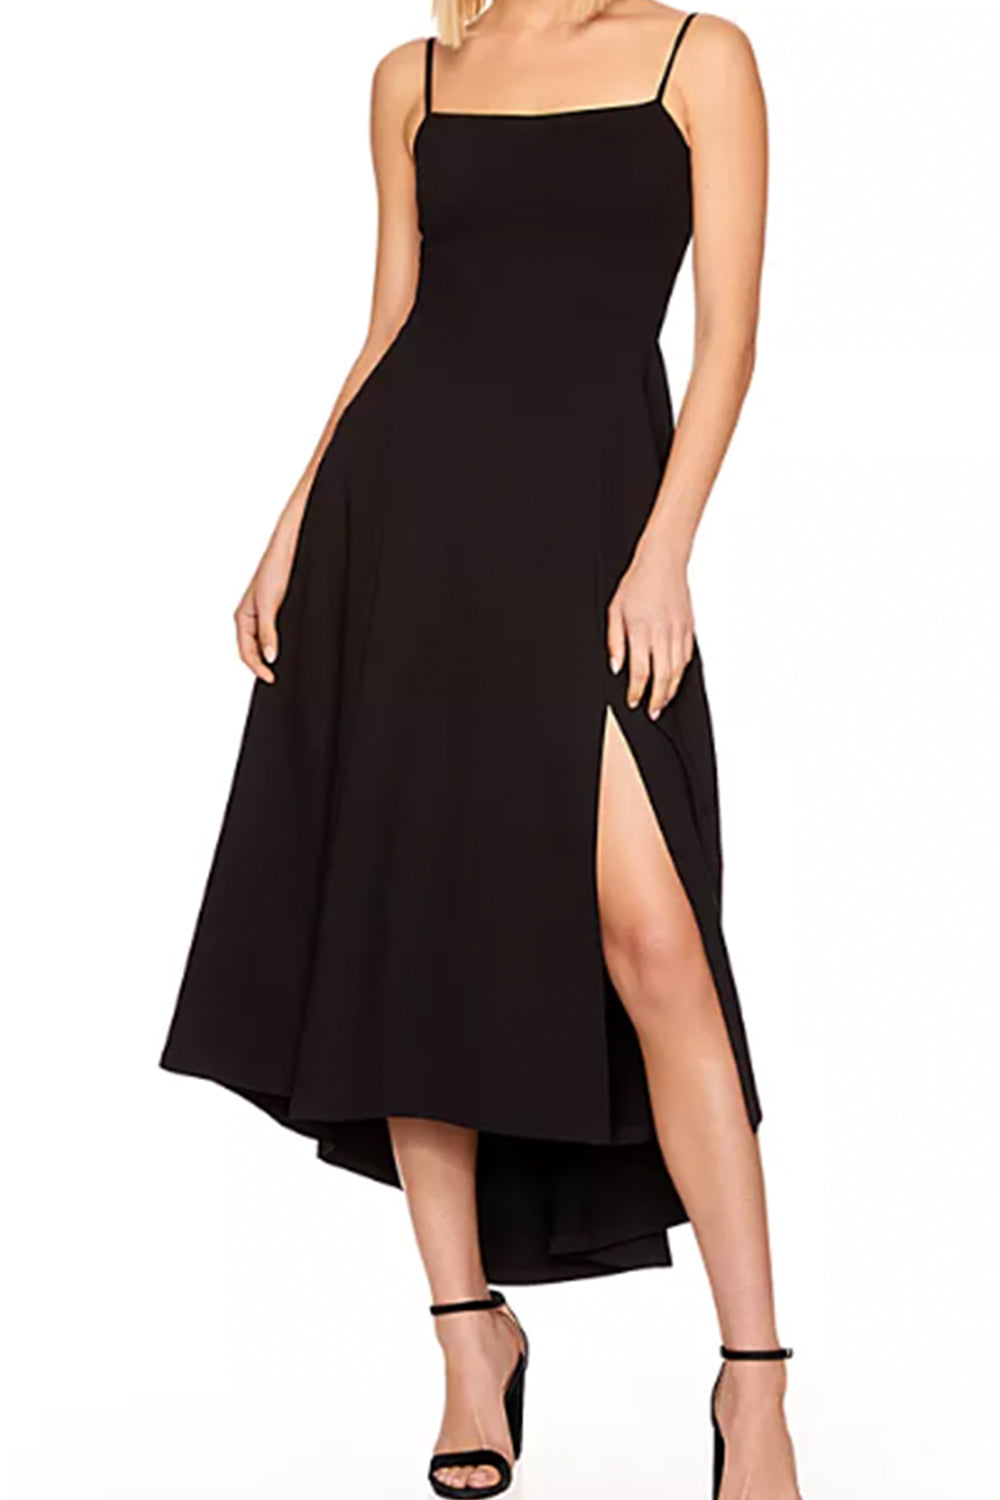 Alluring Black Dress